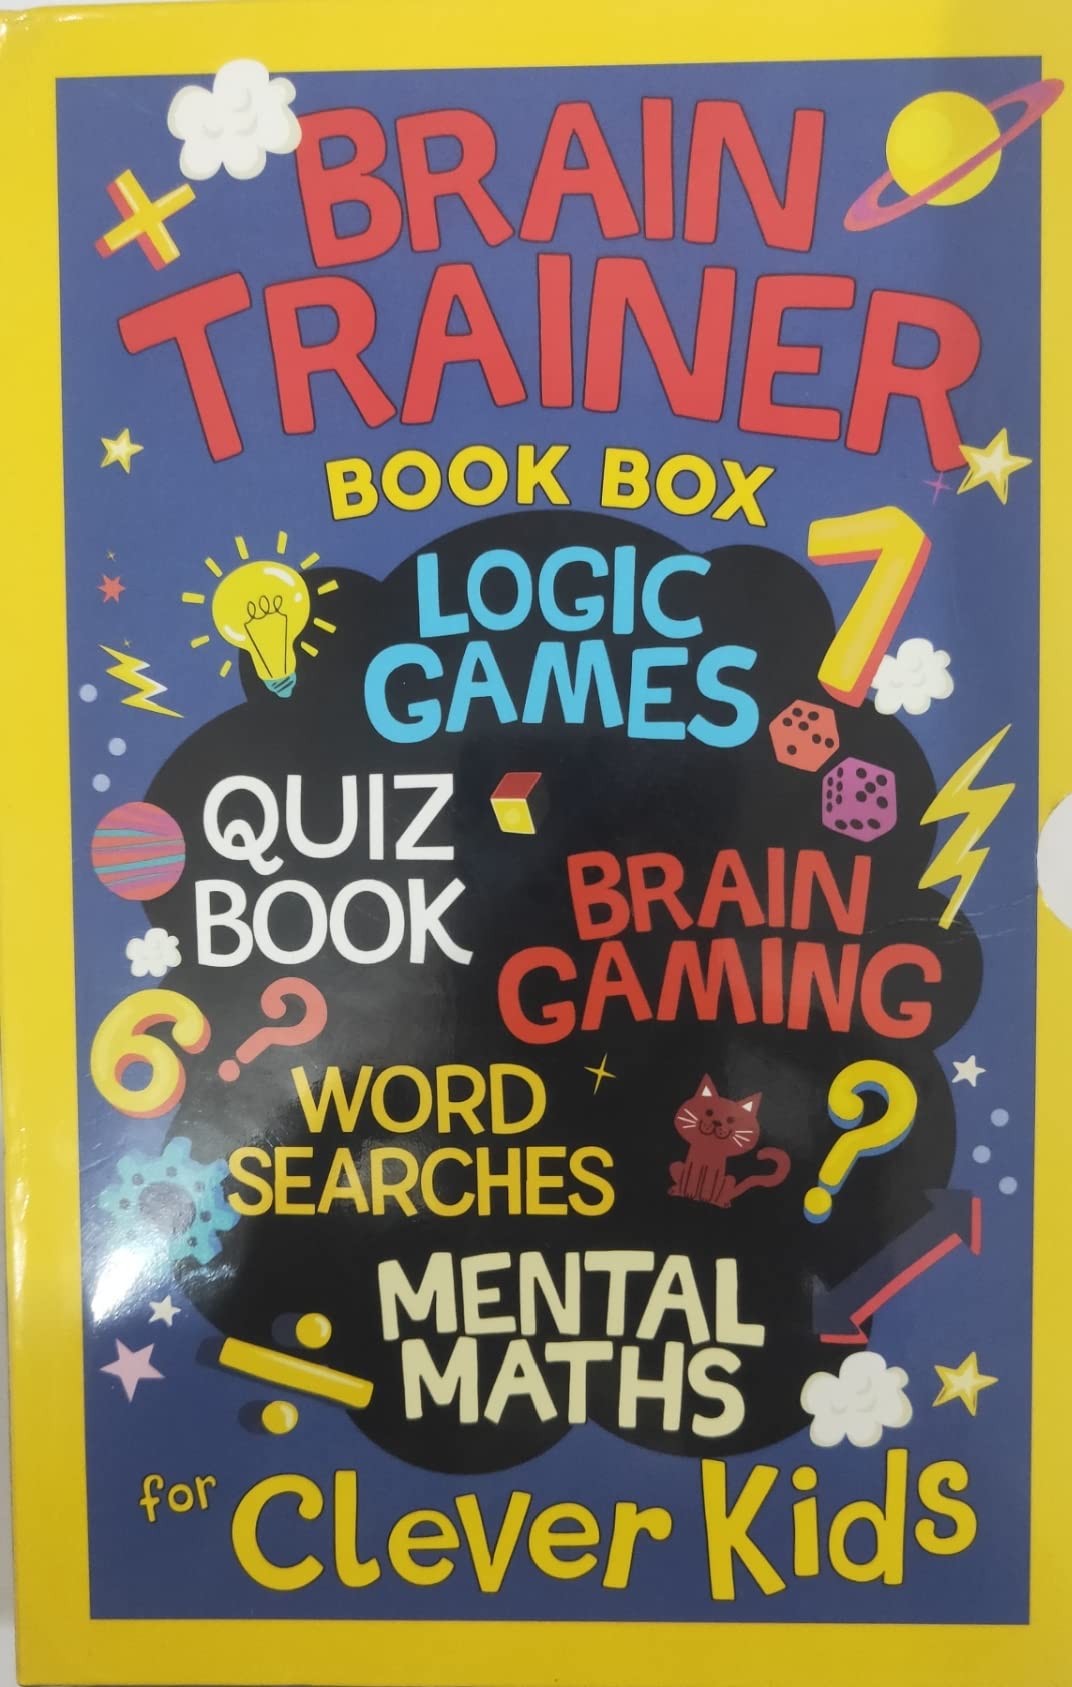 Brain Trainer - Pack of 5 Books for Kids